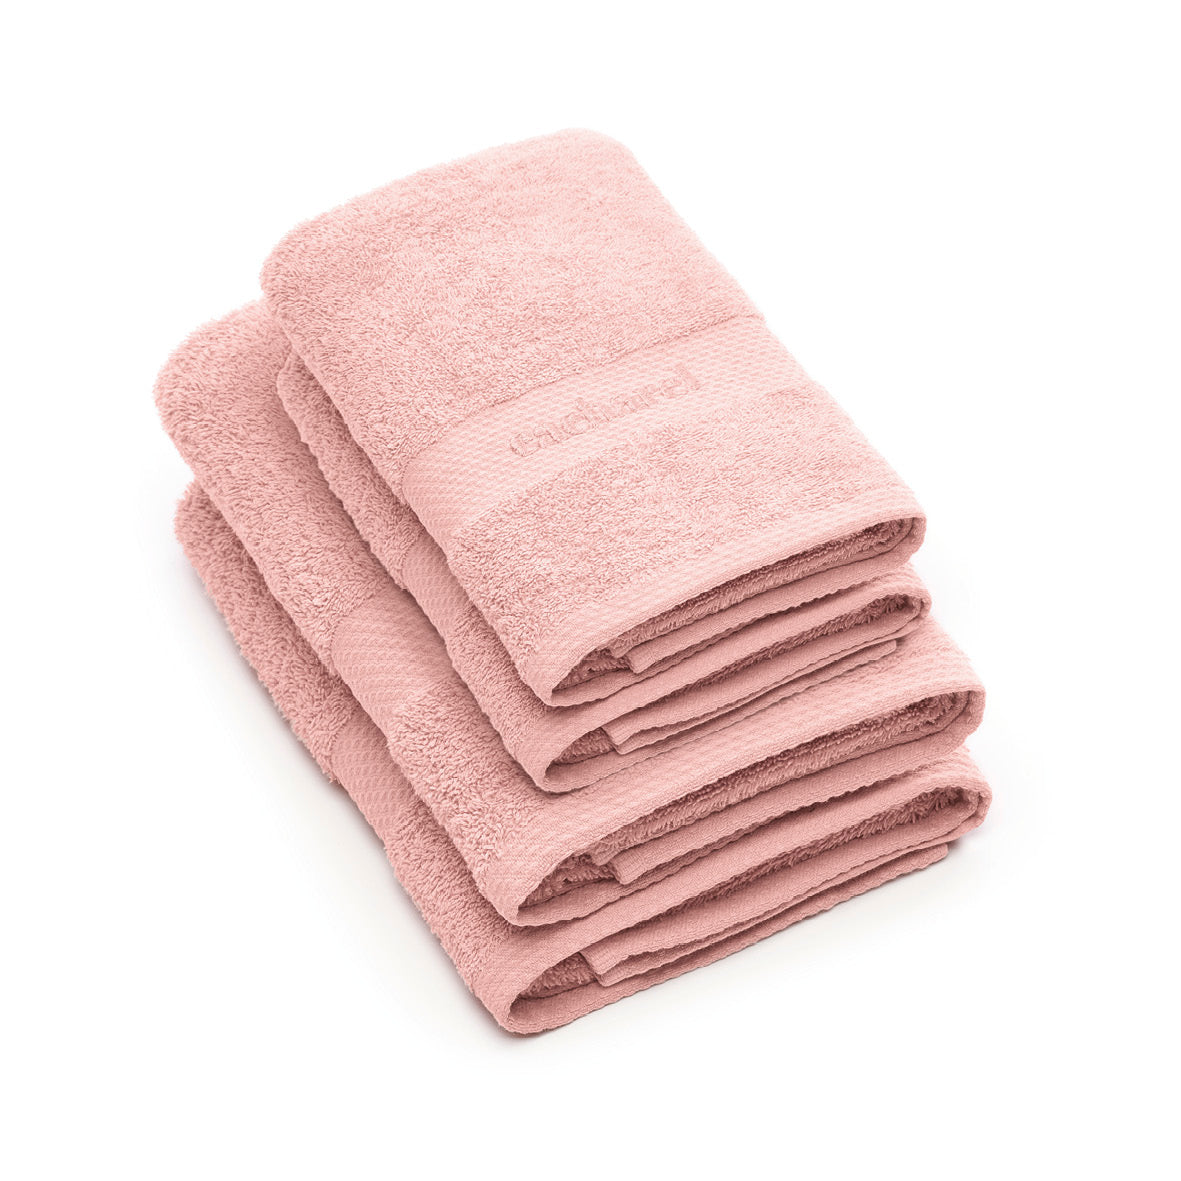 Set of 2 hand towels + 2 bath towels - 50 x 100 cm + 70 x 140 cm